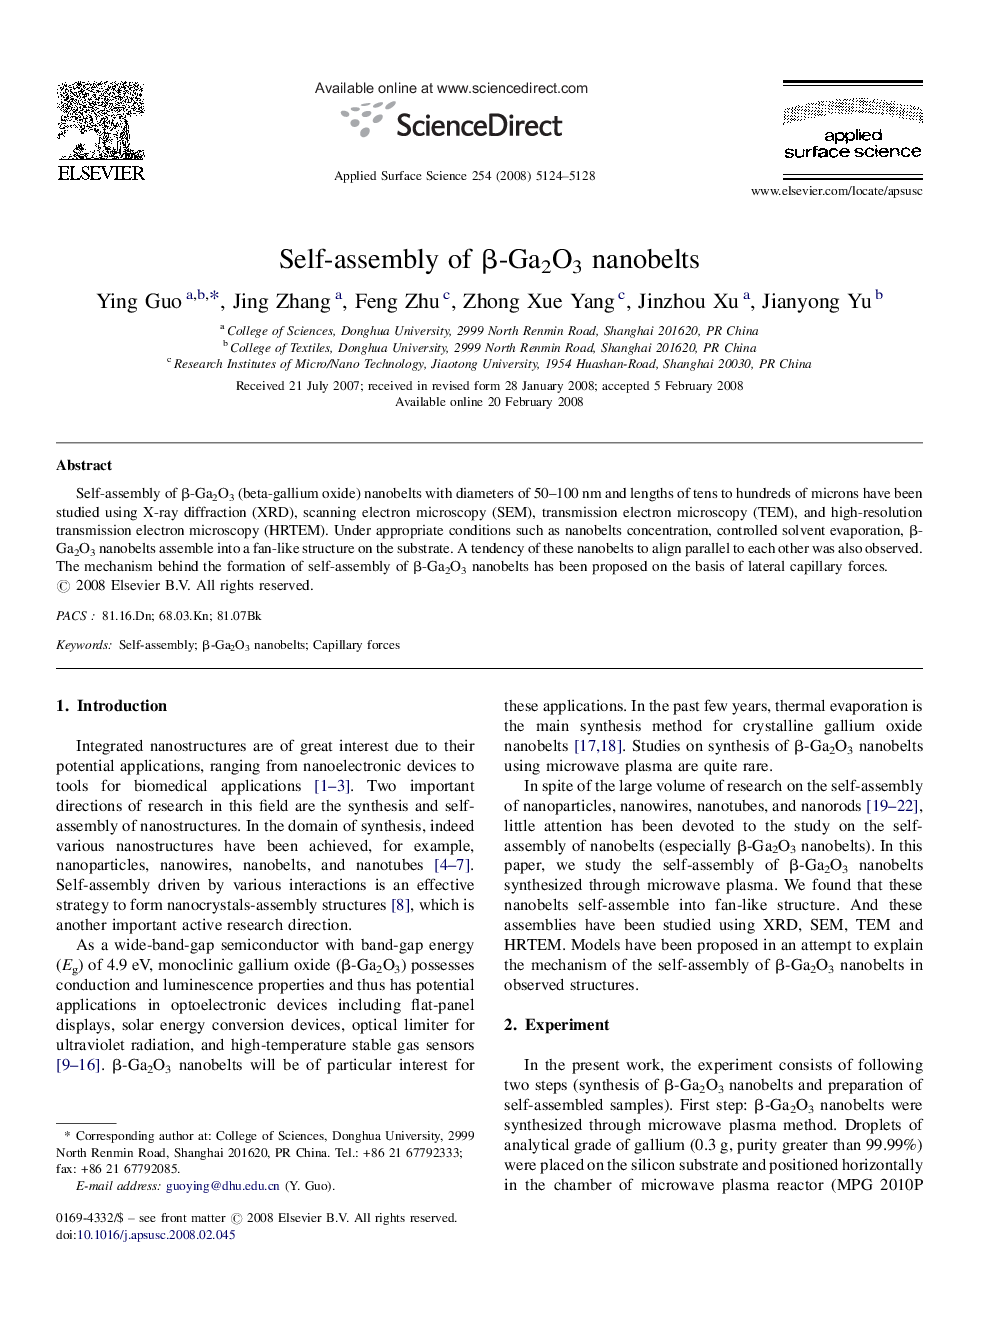 Self-assembly of Î²-Ga2O3 nanobelts